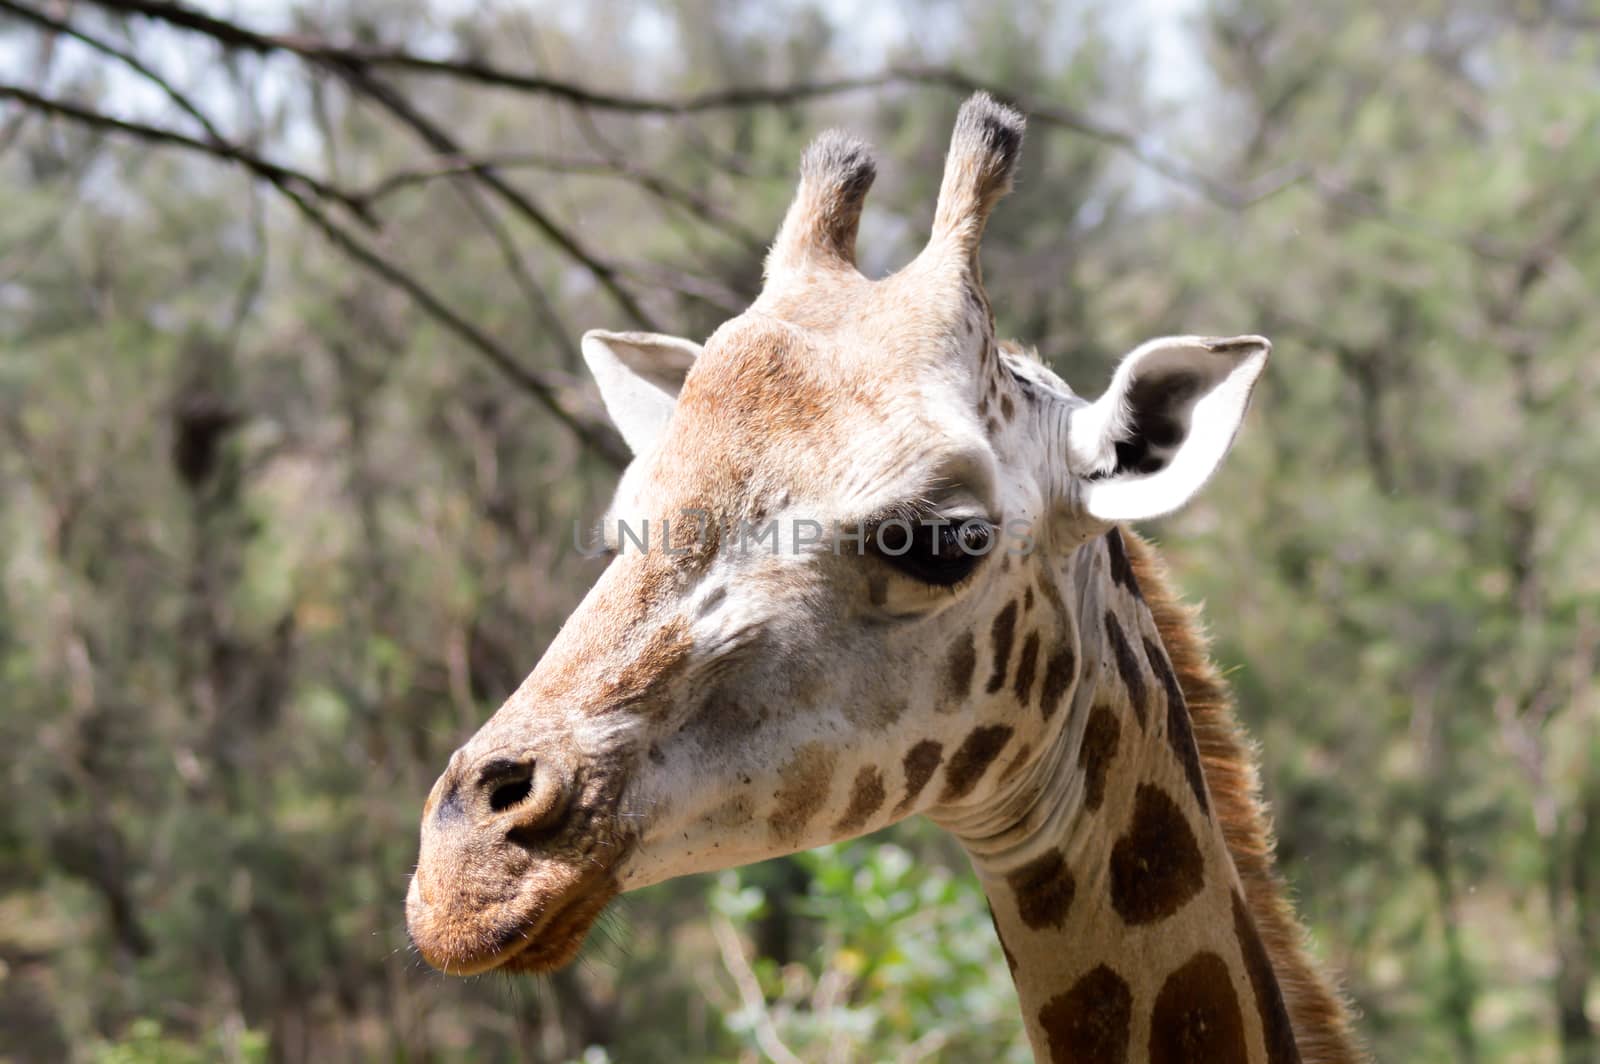 Giraffe head in a park in Mombasa, Kenya